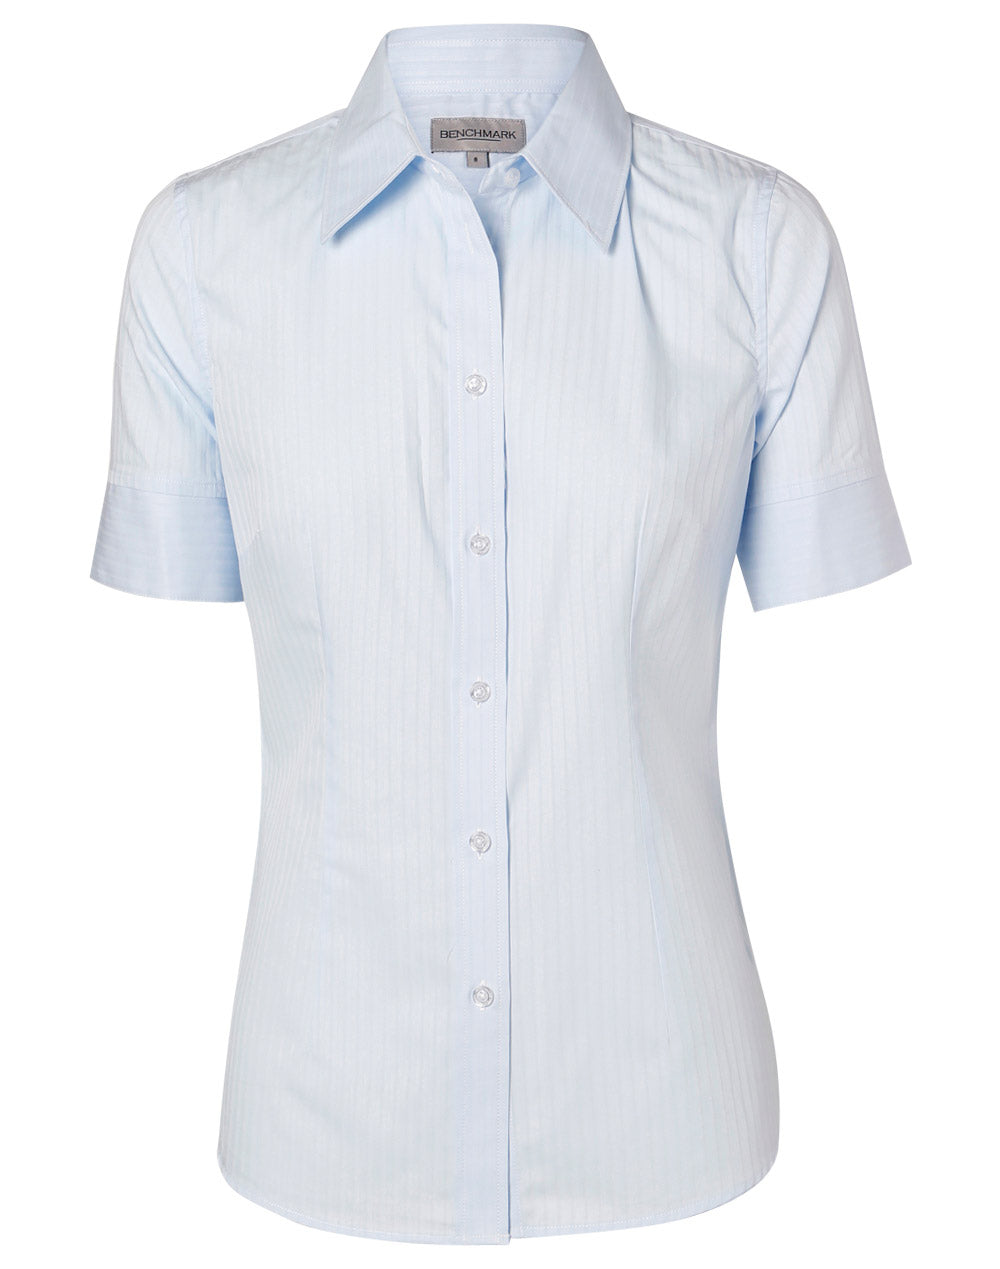 Ladies Self Stripe Short Sleeve Shirt - M8100S